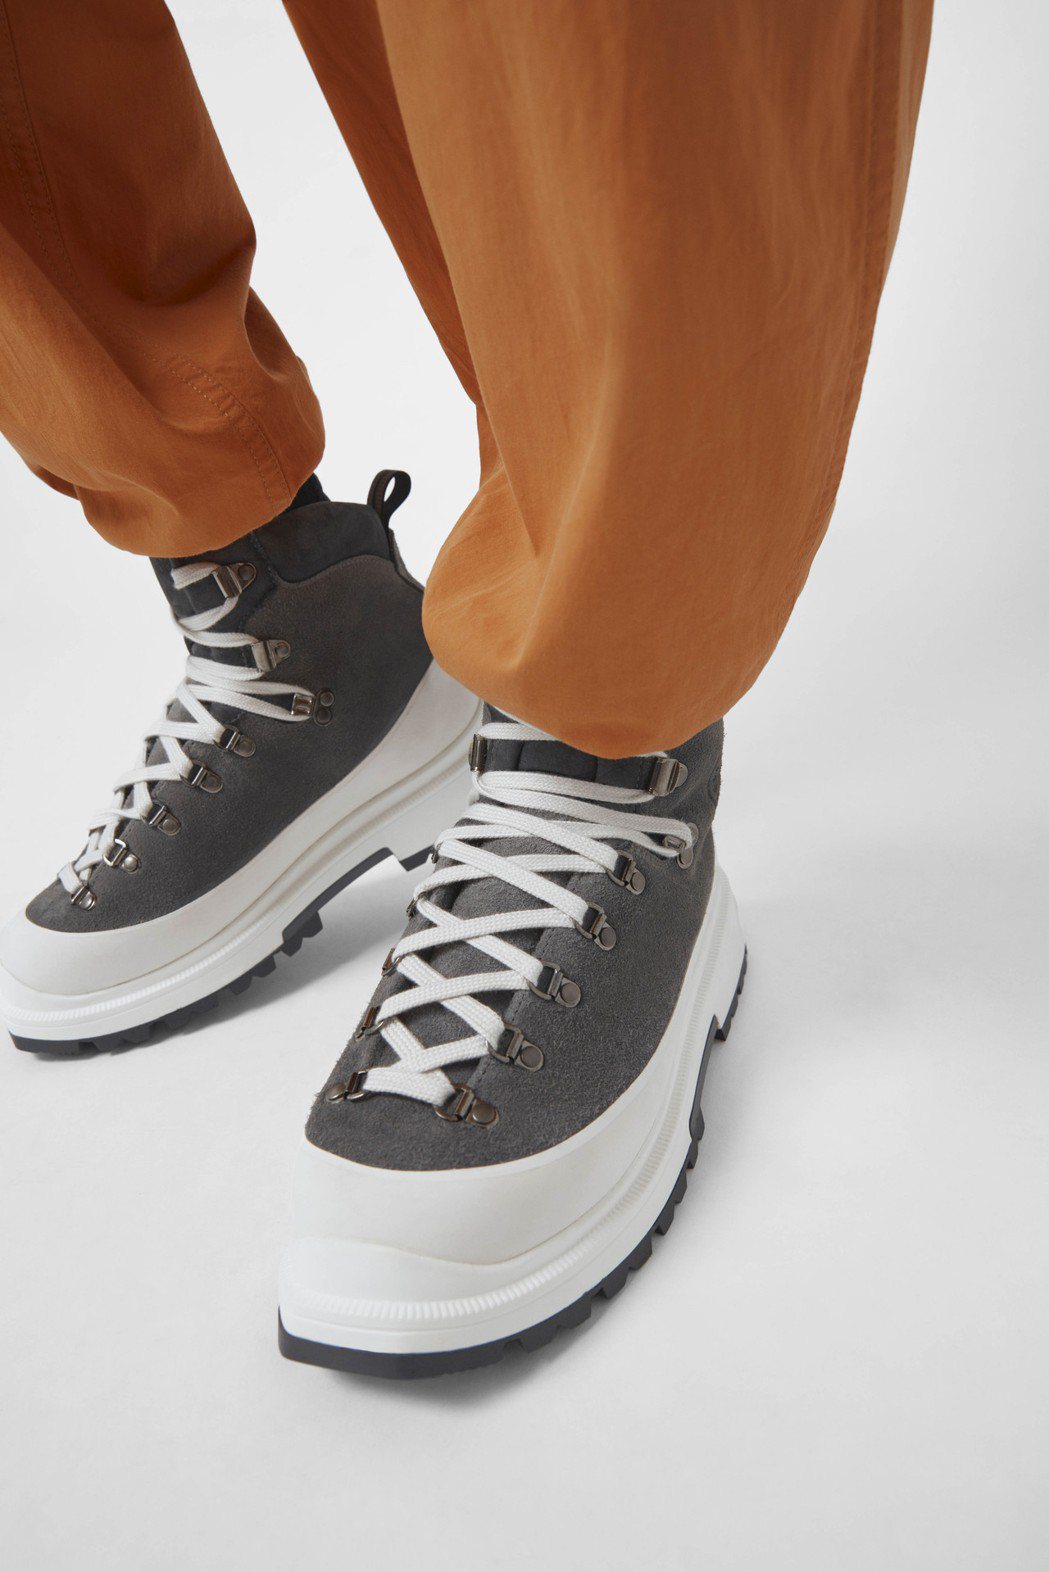 Journey Boot旅行靴 從經典Hiker靴汲取靈感 鞋頭設計略成方形。